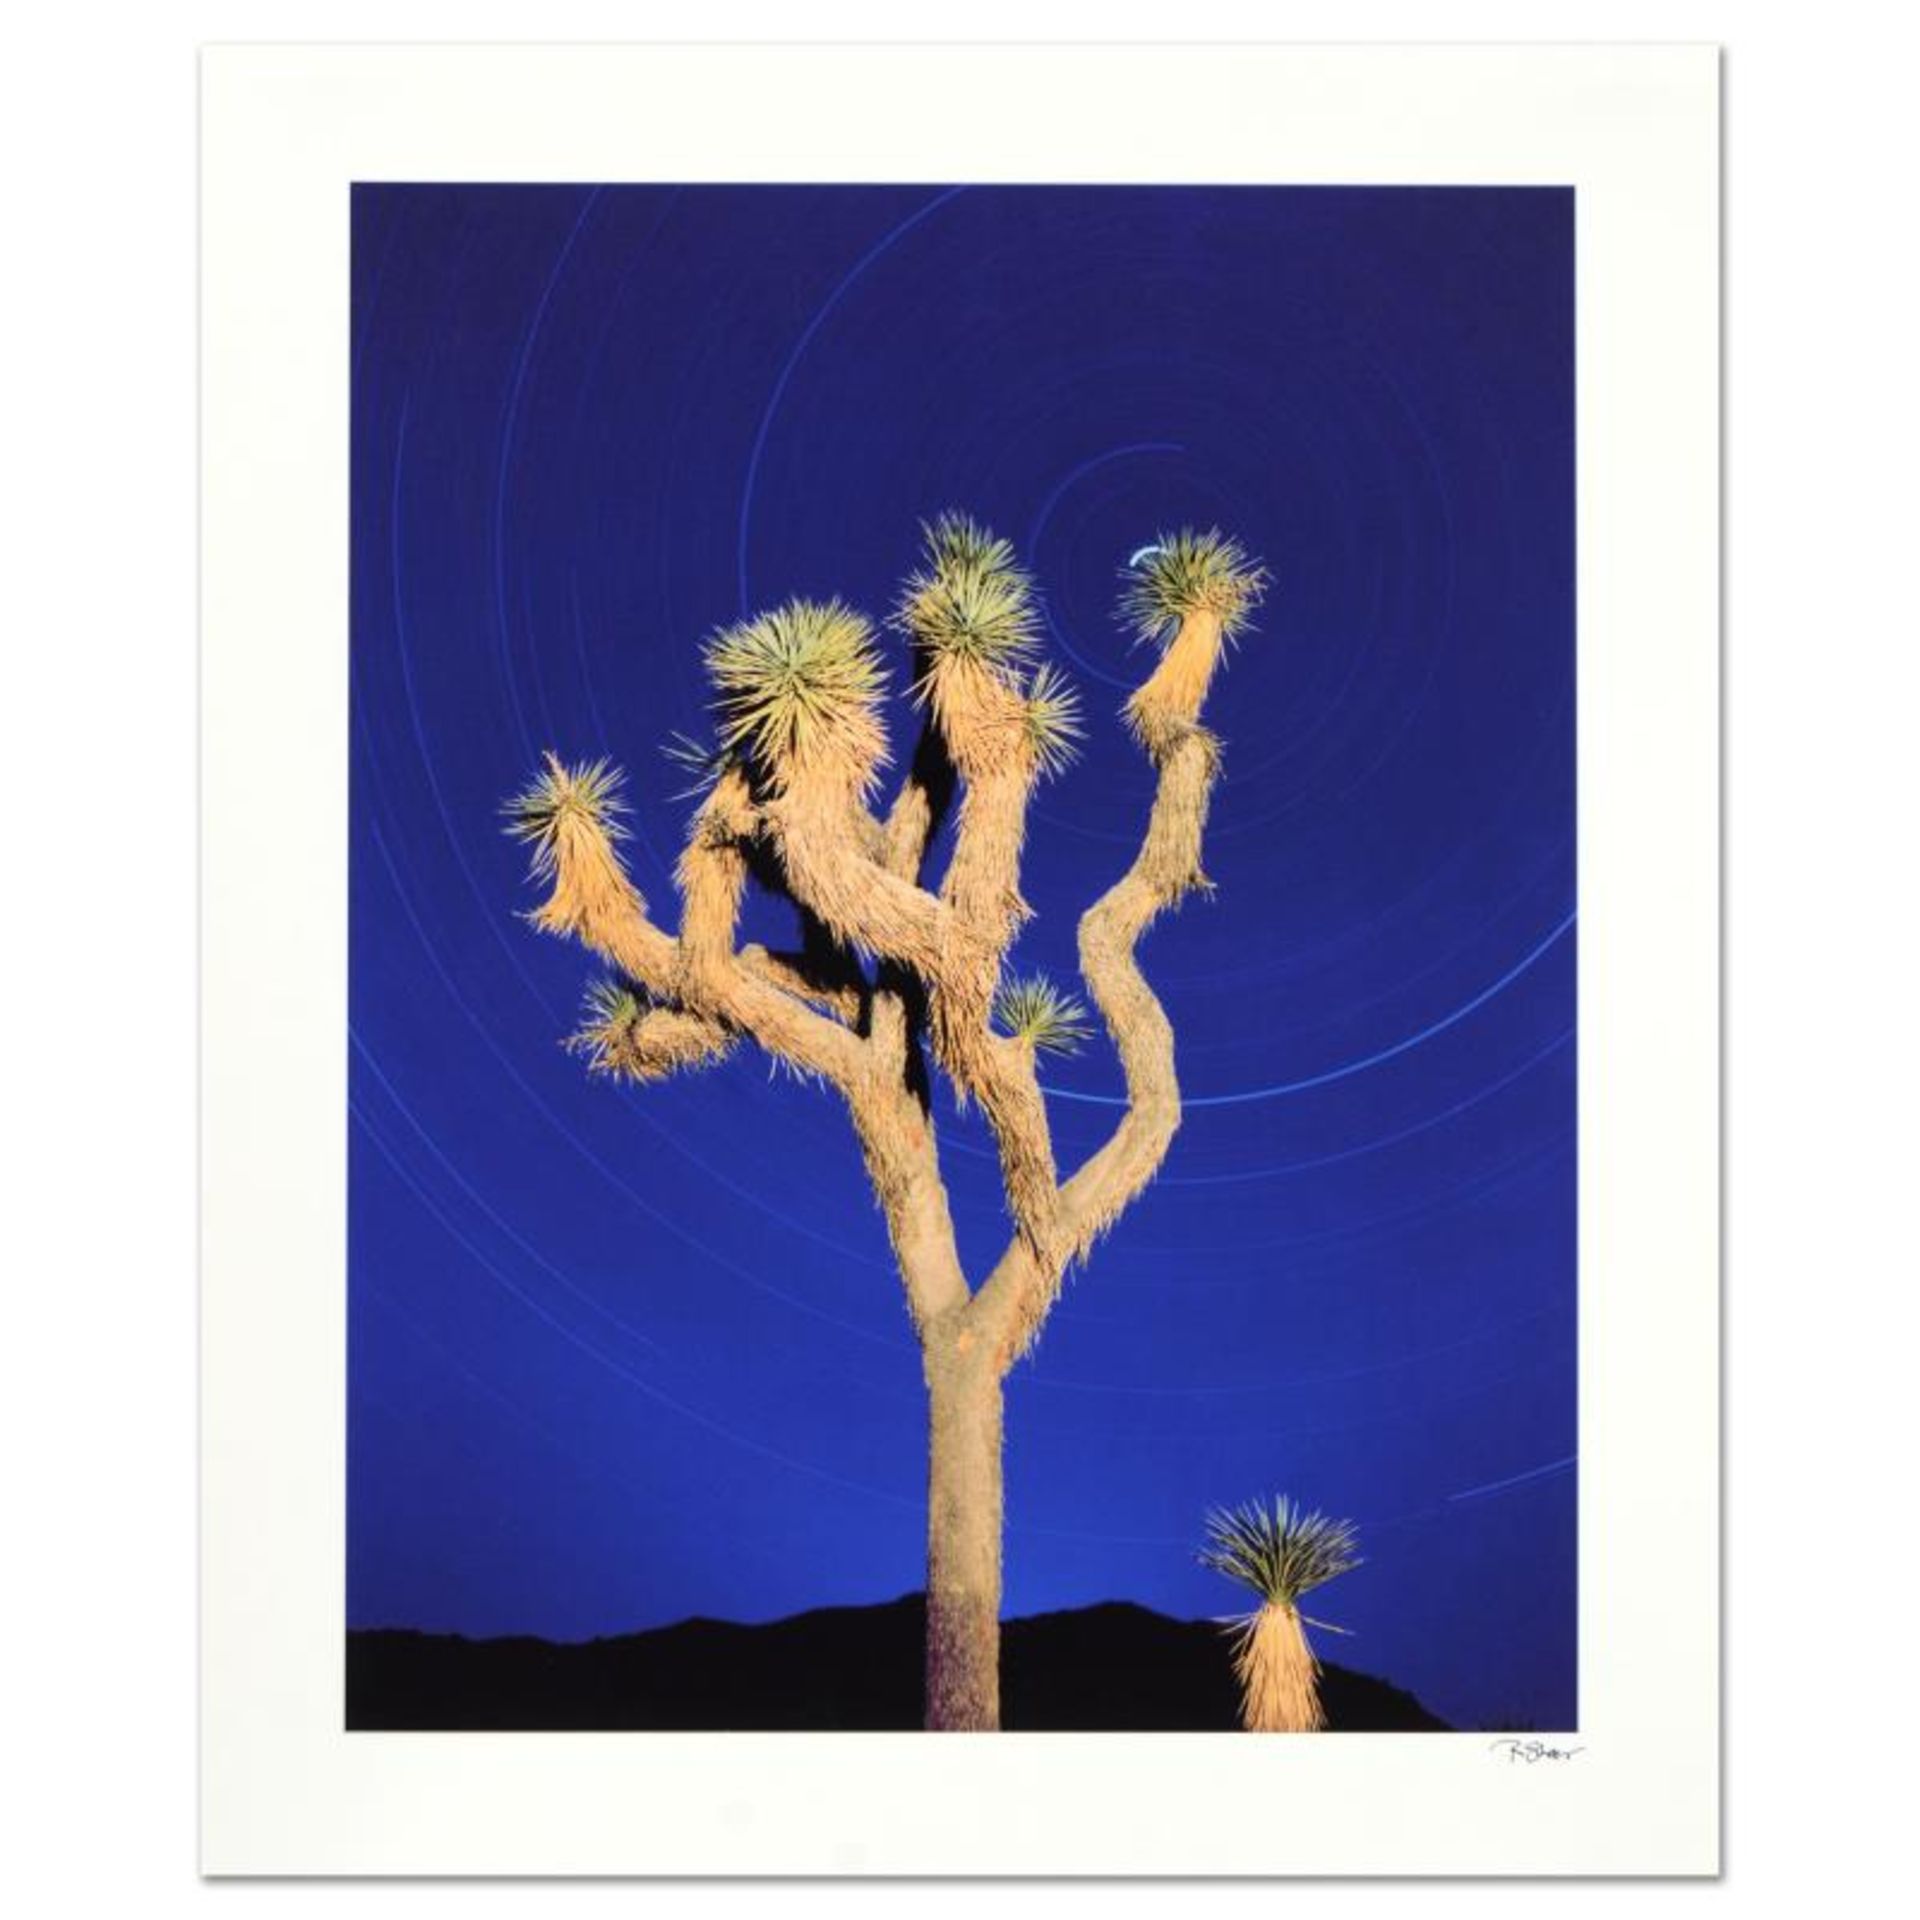 Robert Sheer, "Joshua Tree" Limited Edition Single Exposure Photograph, Numbered